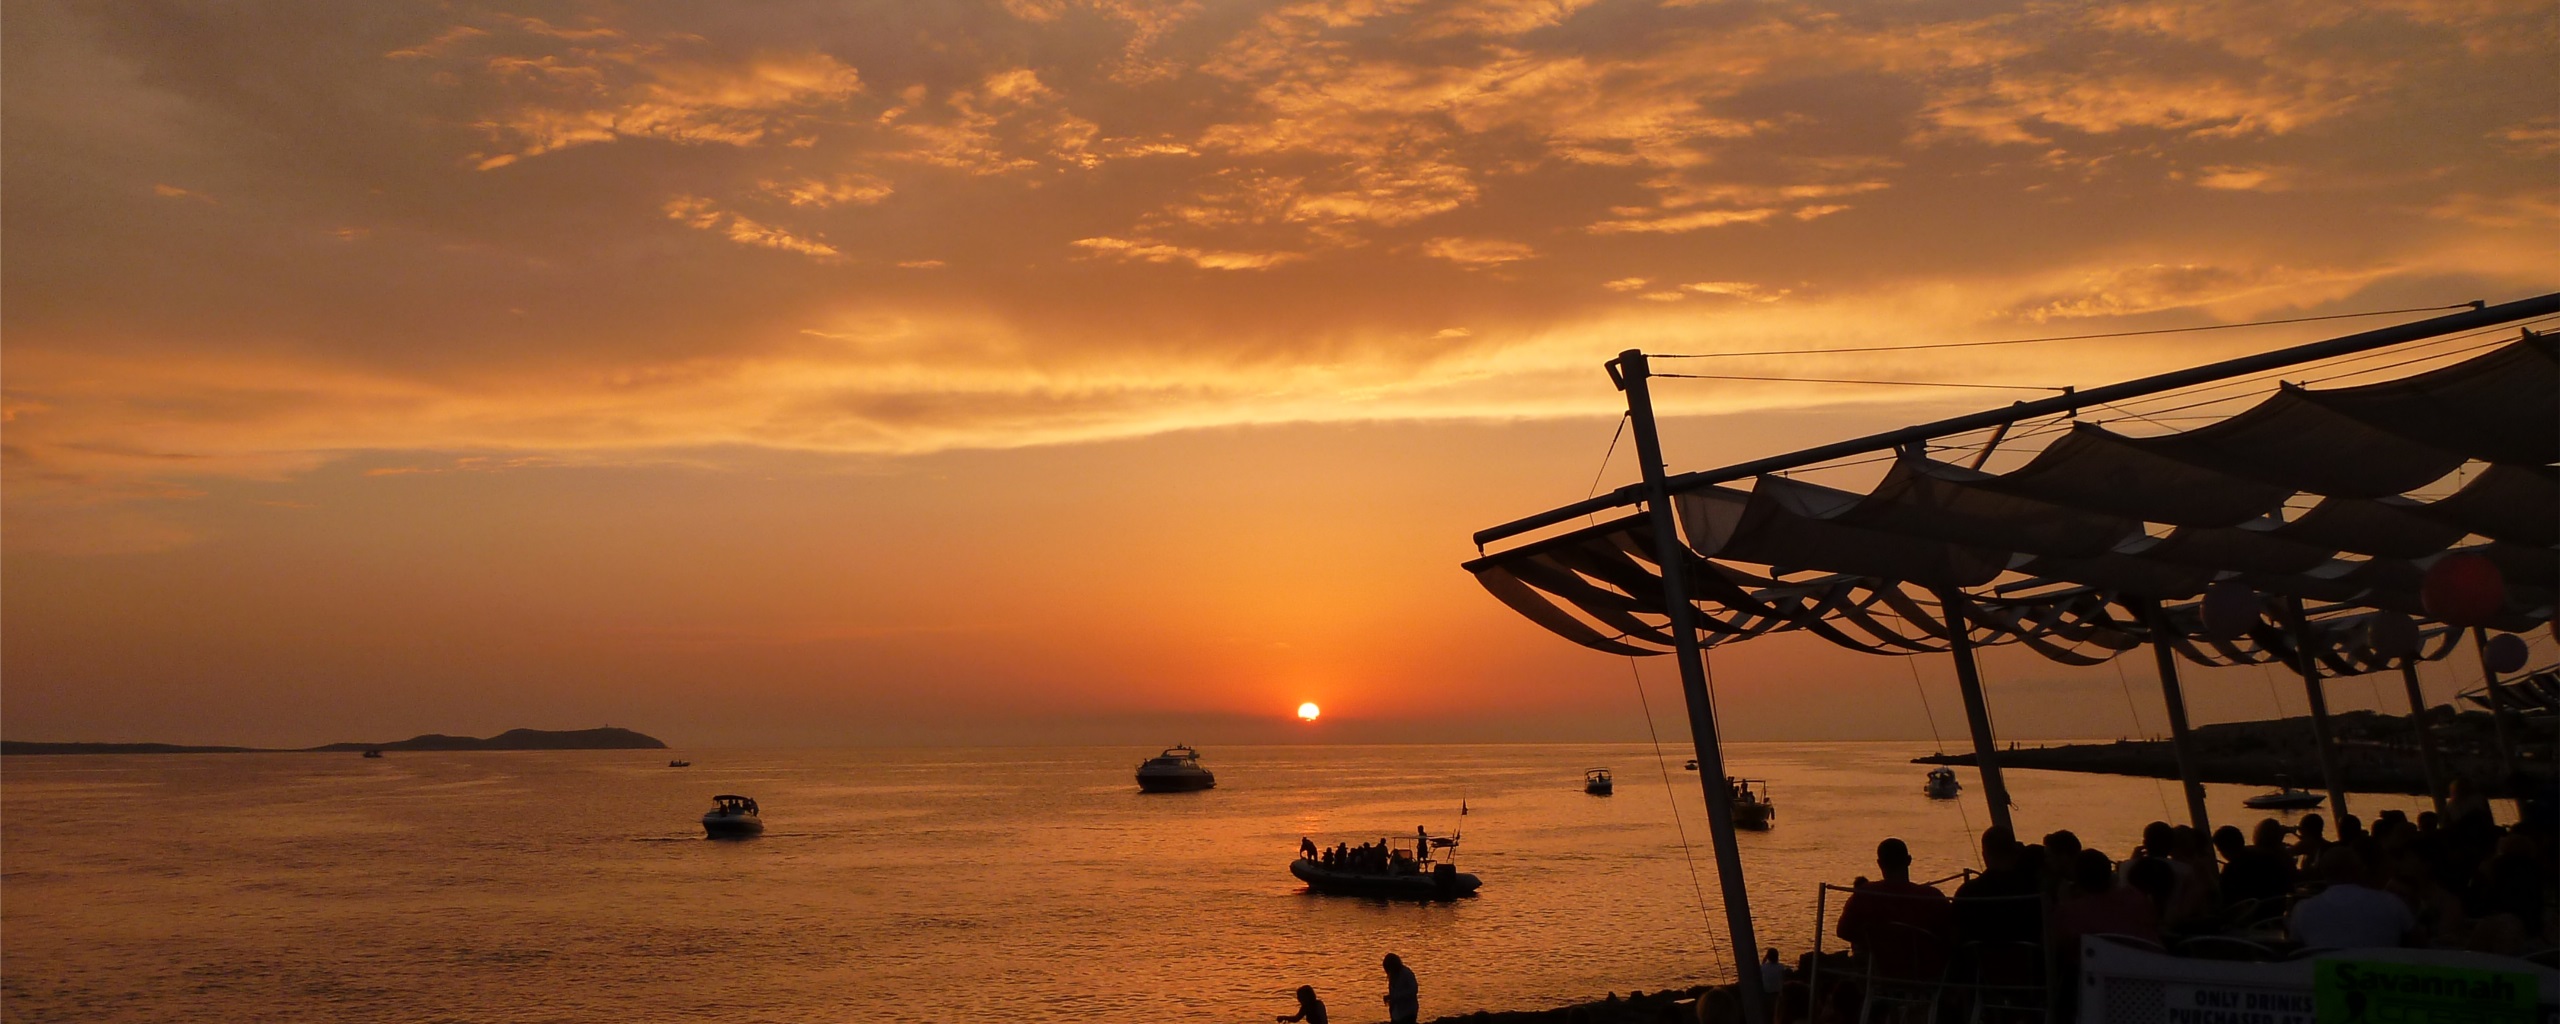 File:Sunset Café del Mar Ibiza 1.jpg - Wikimedia Commons